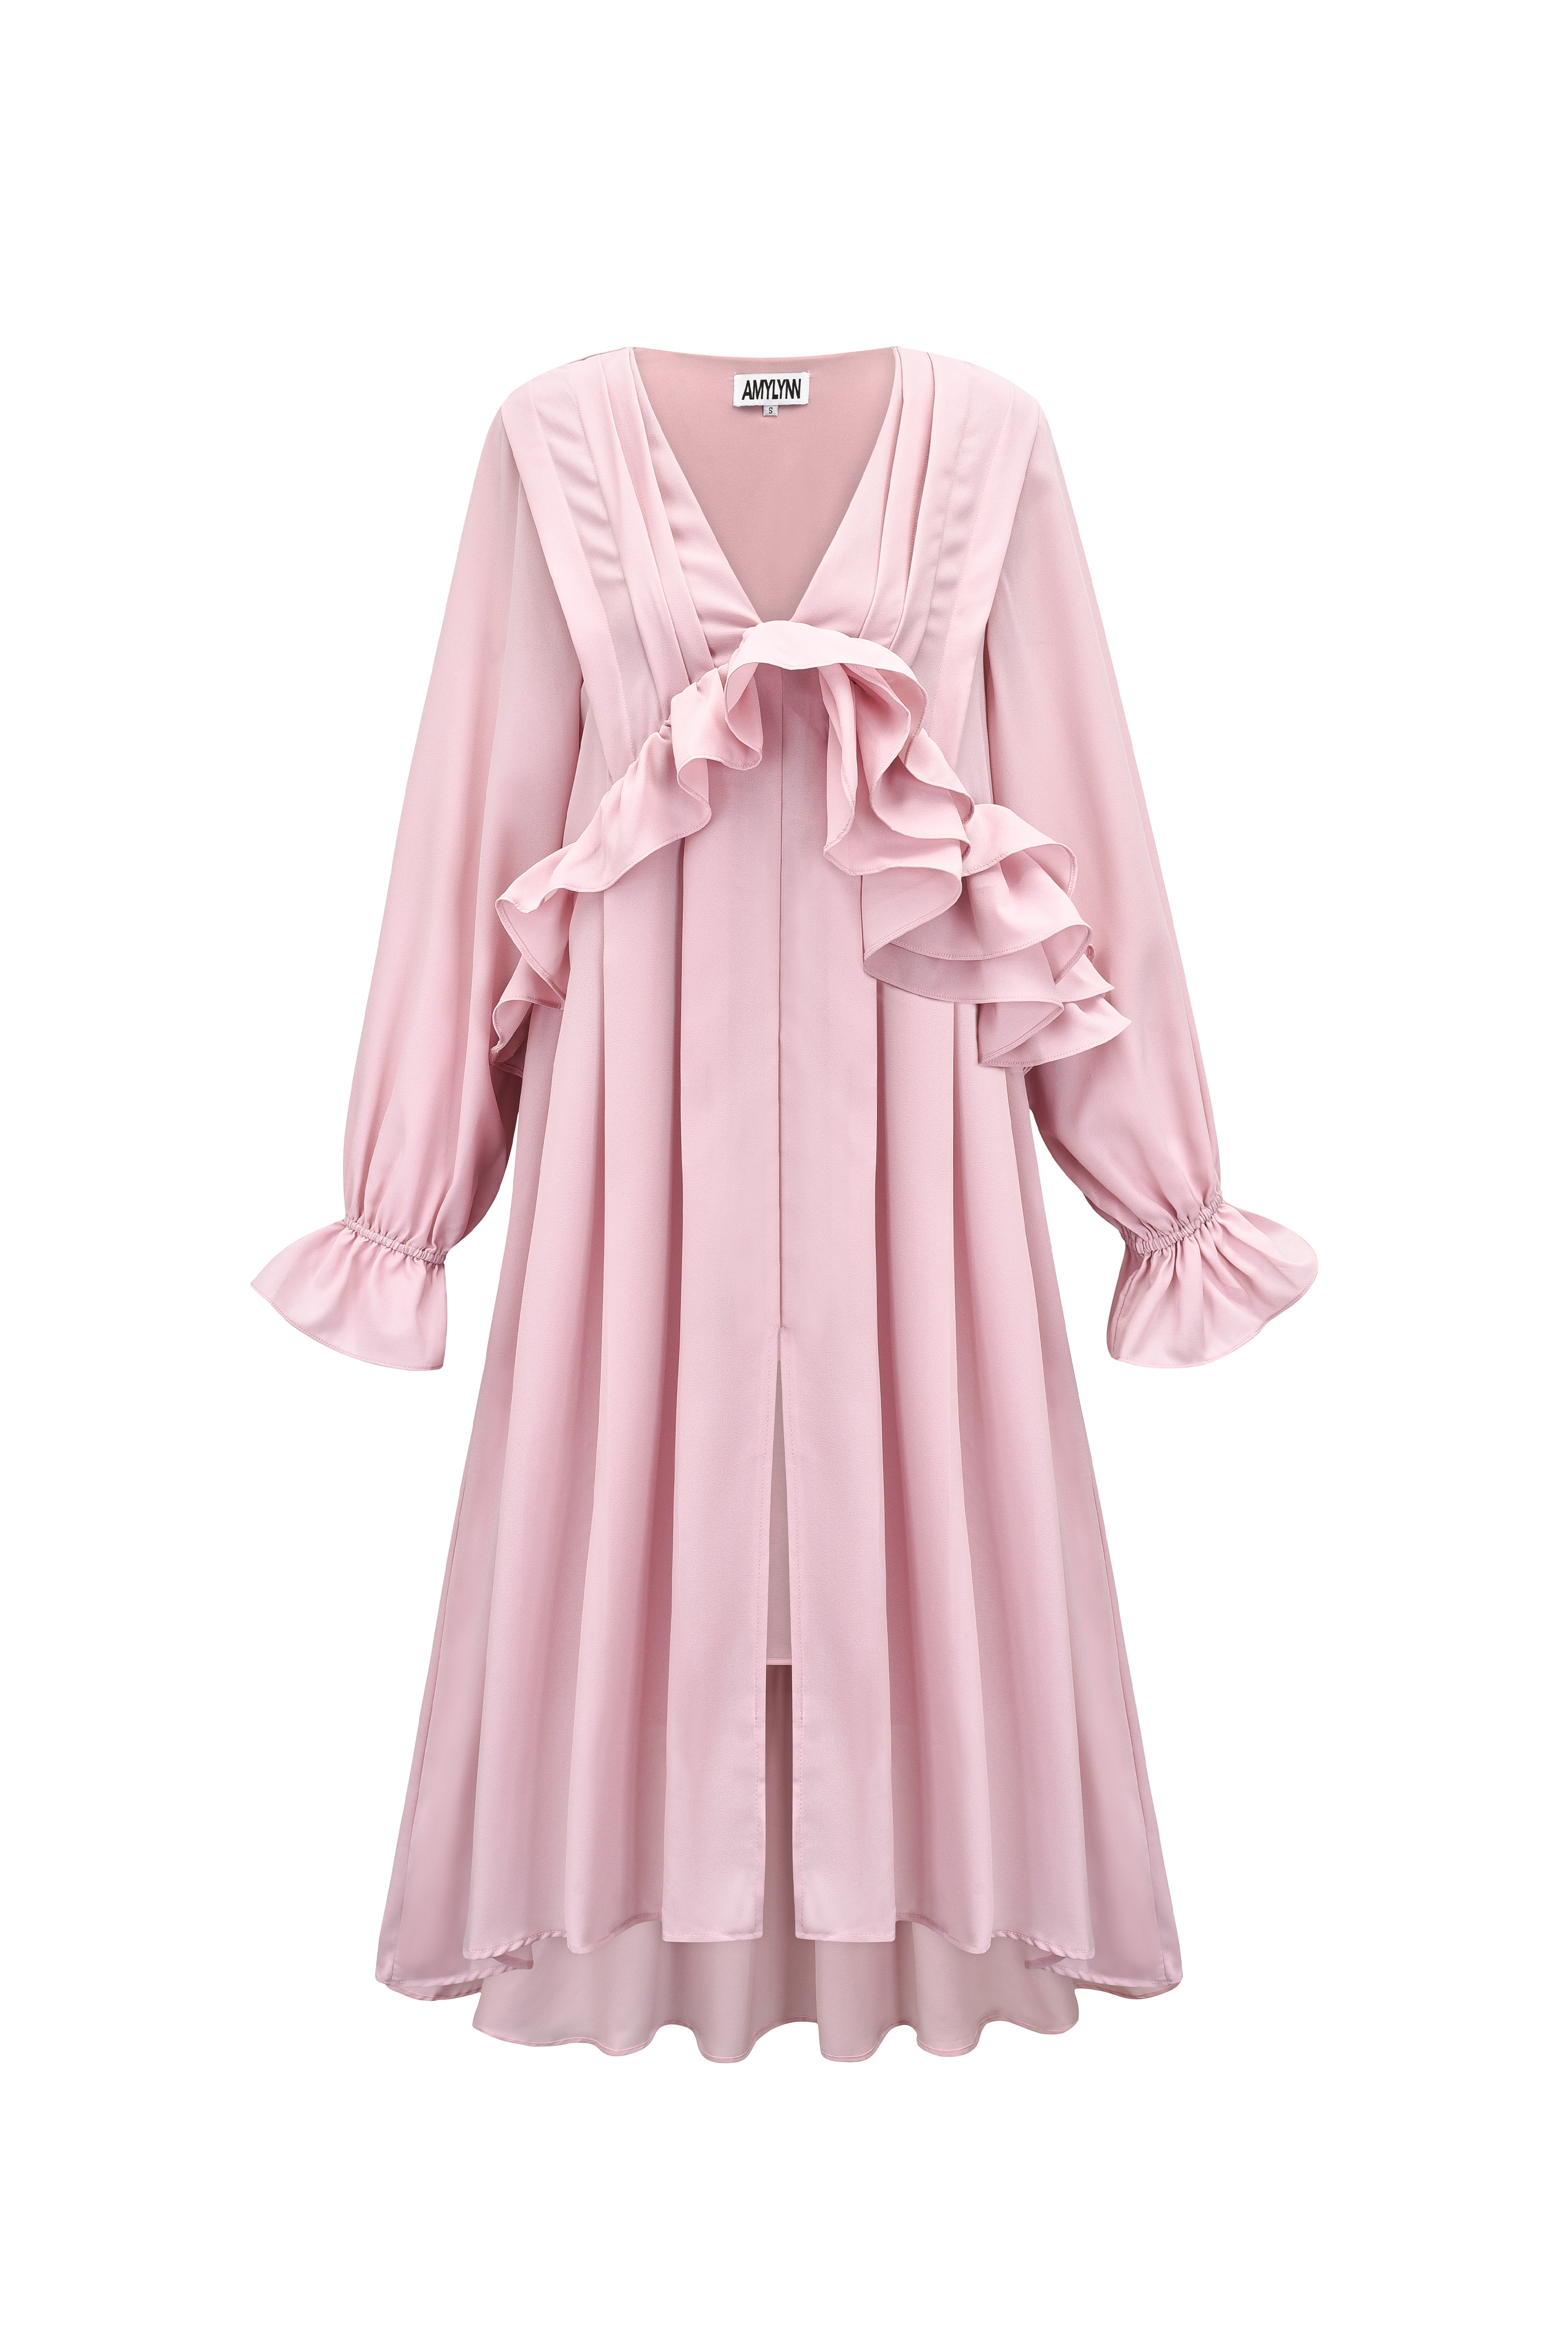 Winnie Pink Ruffle Dress